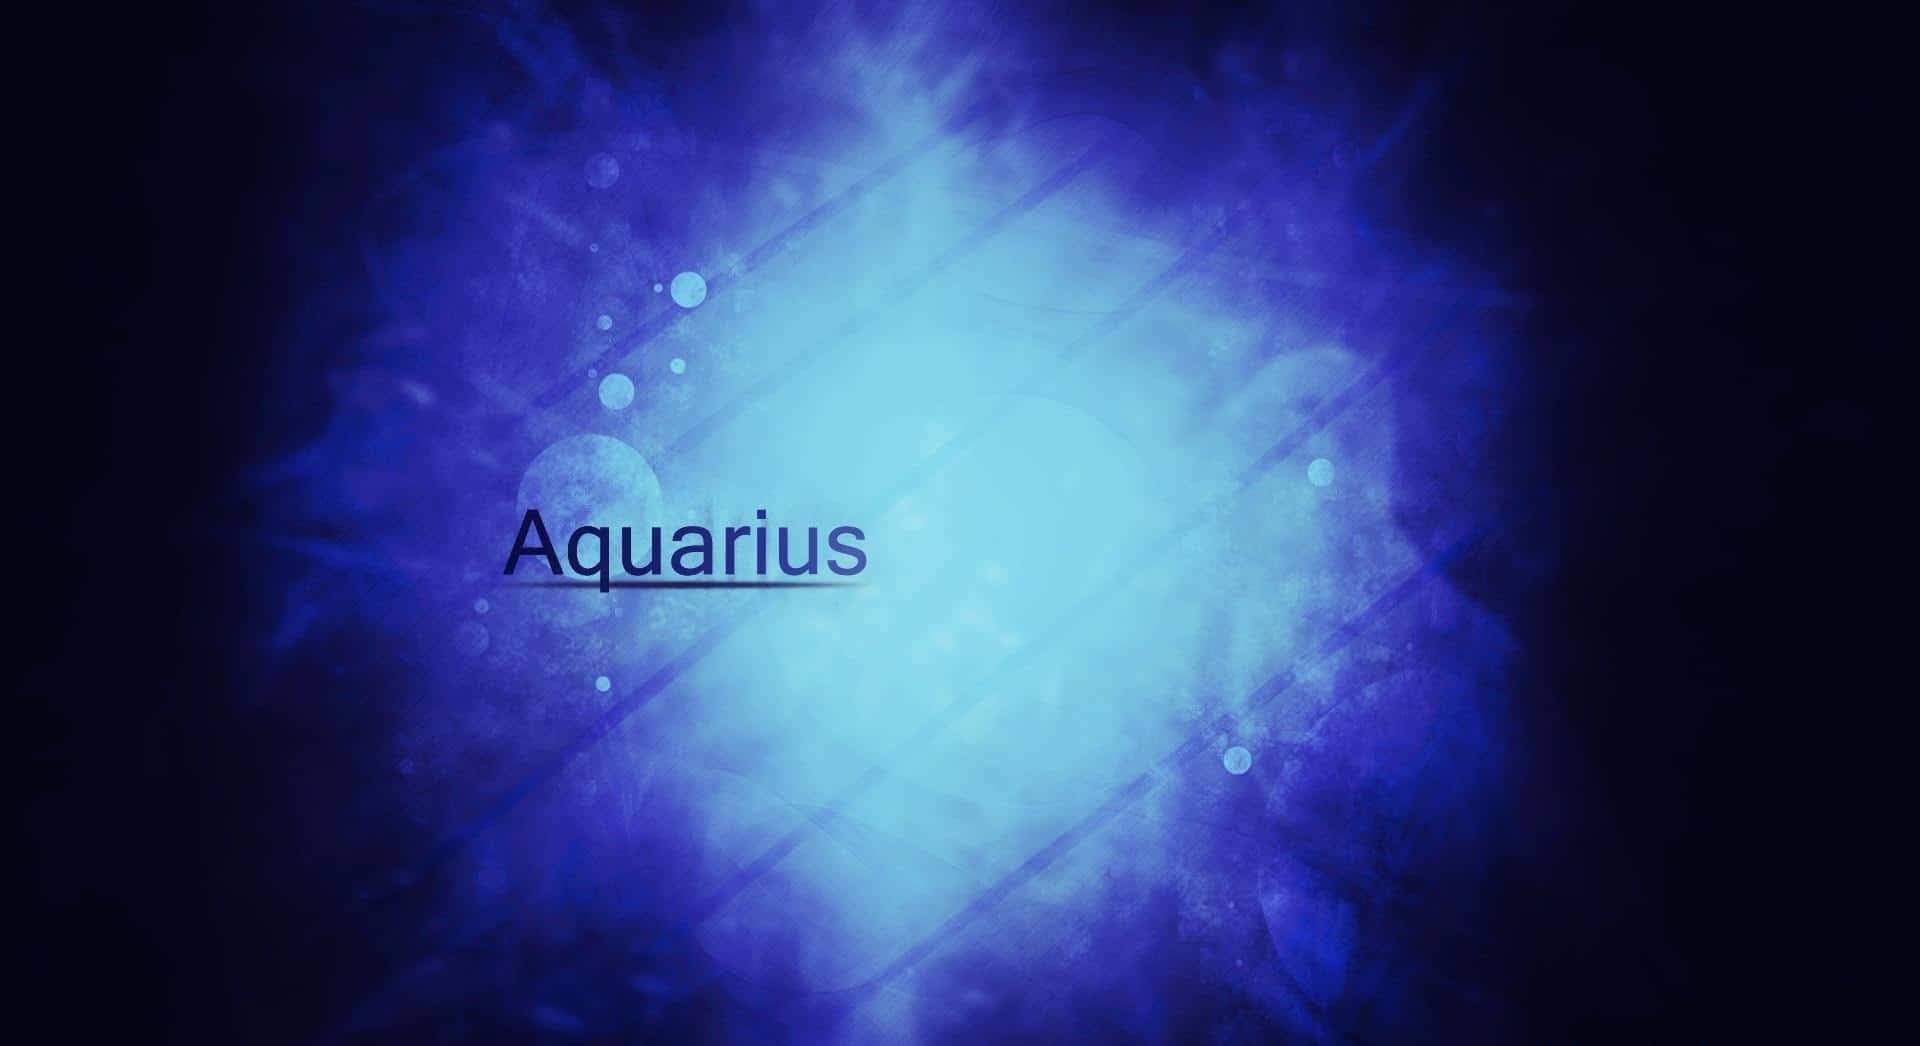 Aquarius Traits of the Zodiac Sign"